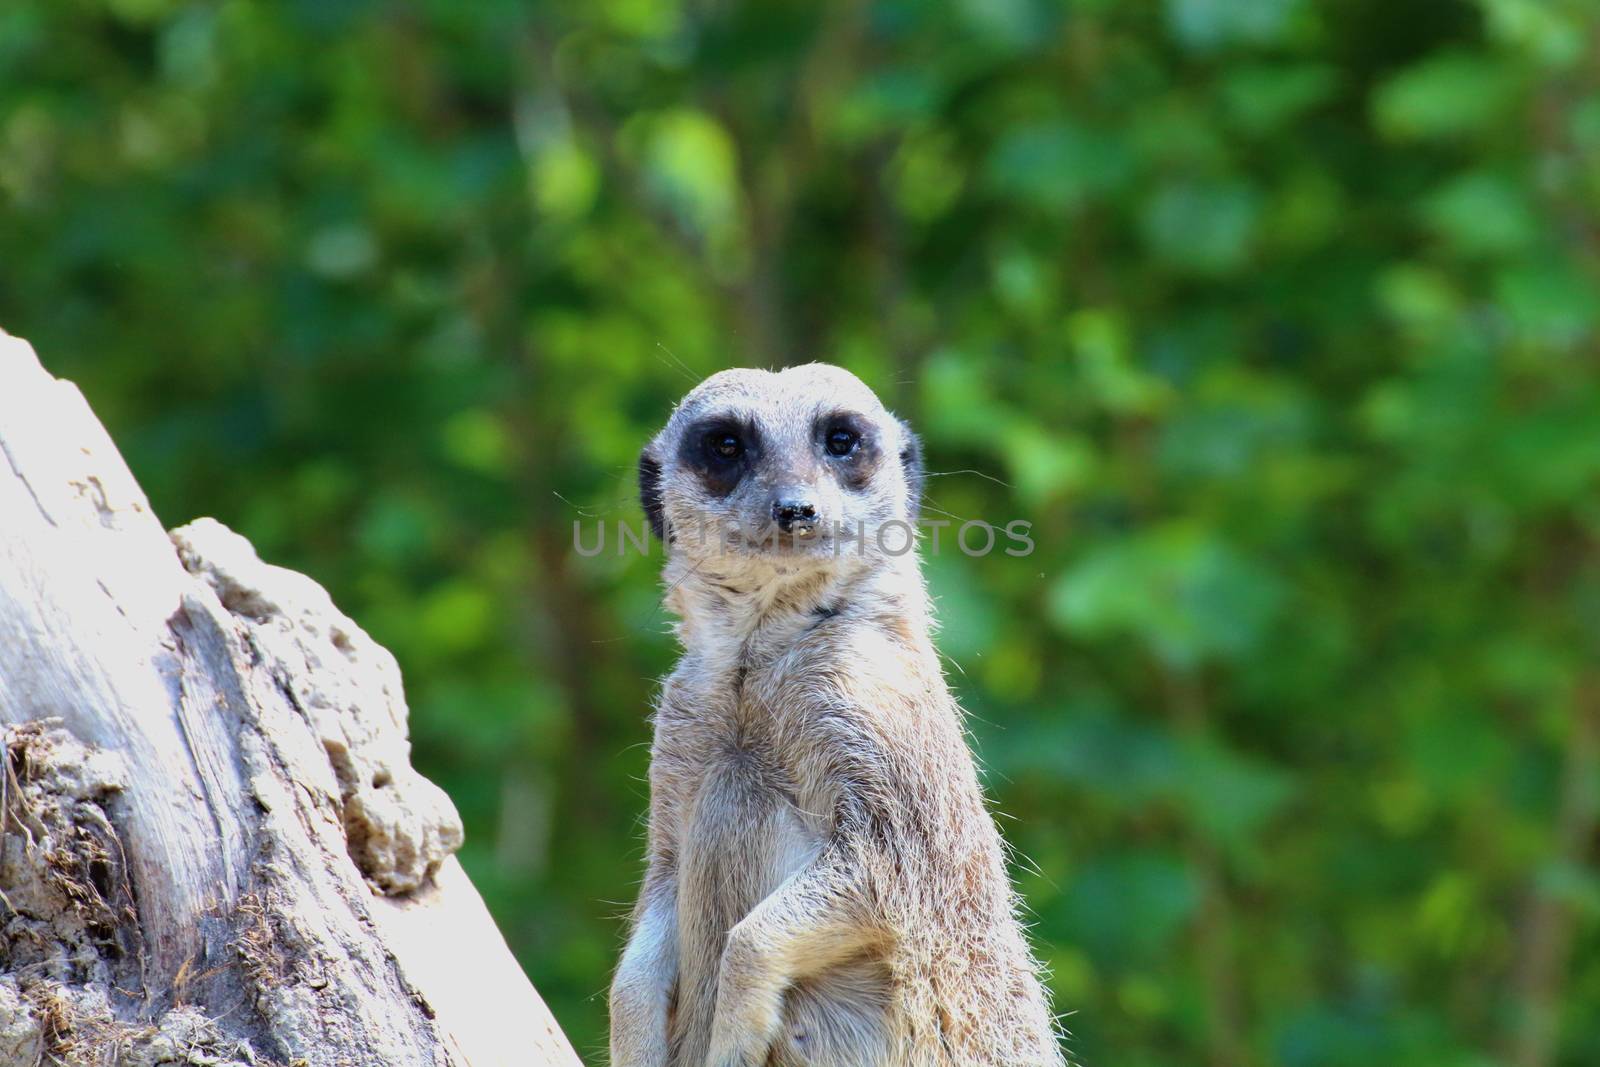 a meerkat remain alert to detect any dangers